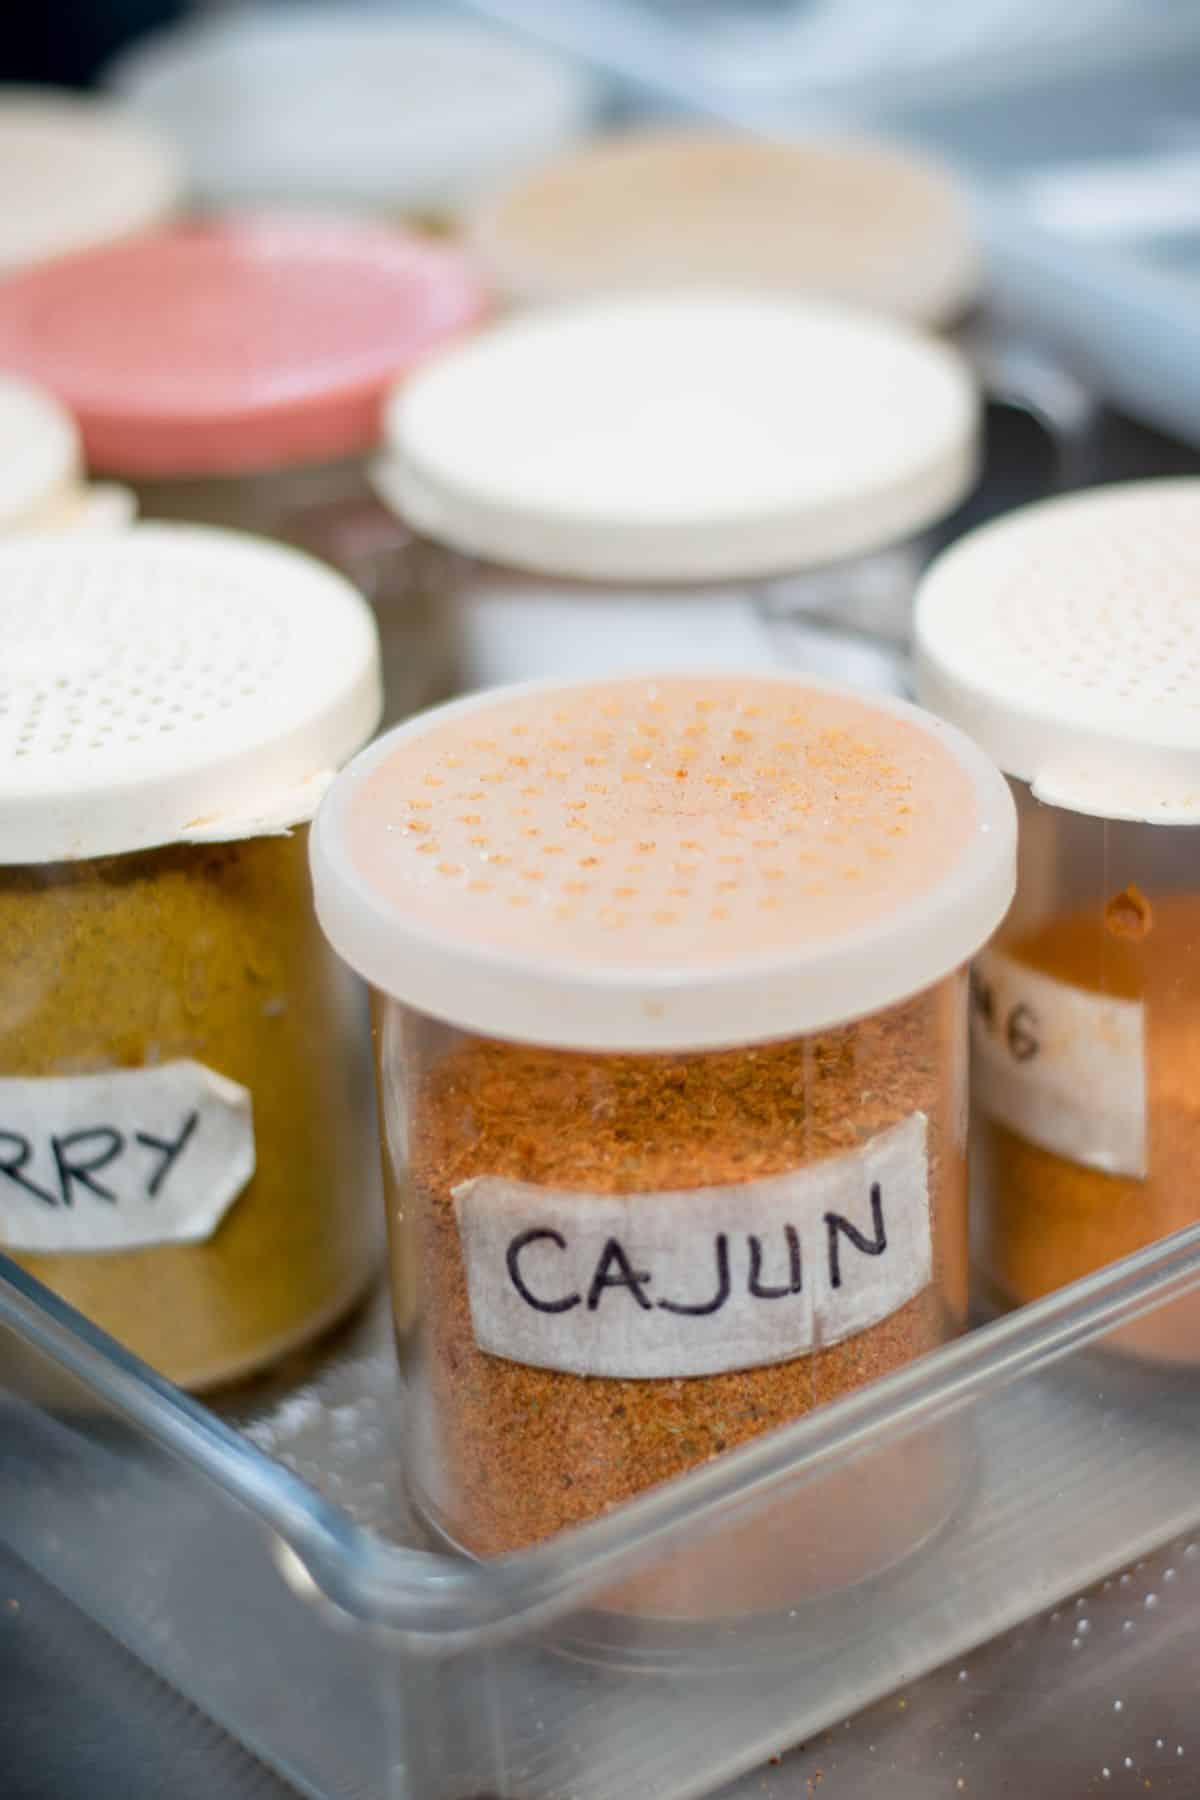 Cajun seasoning container on spice rack.